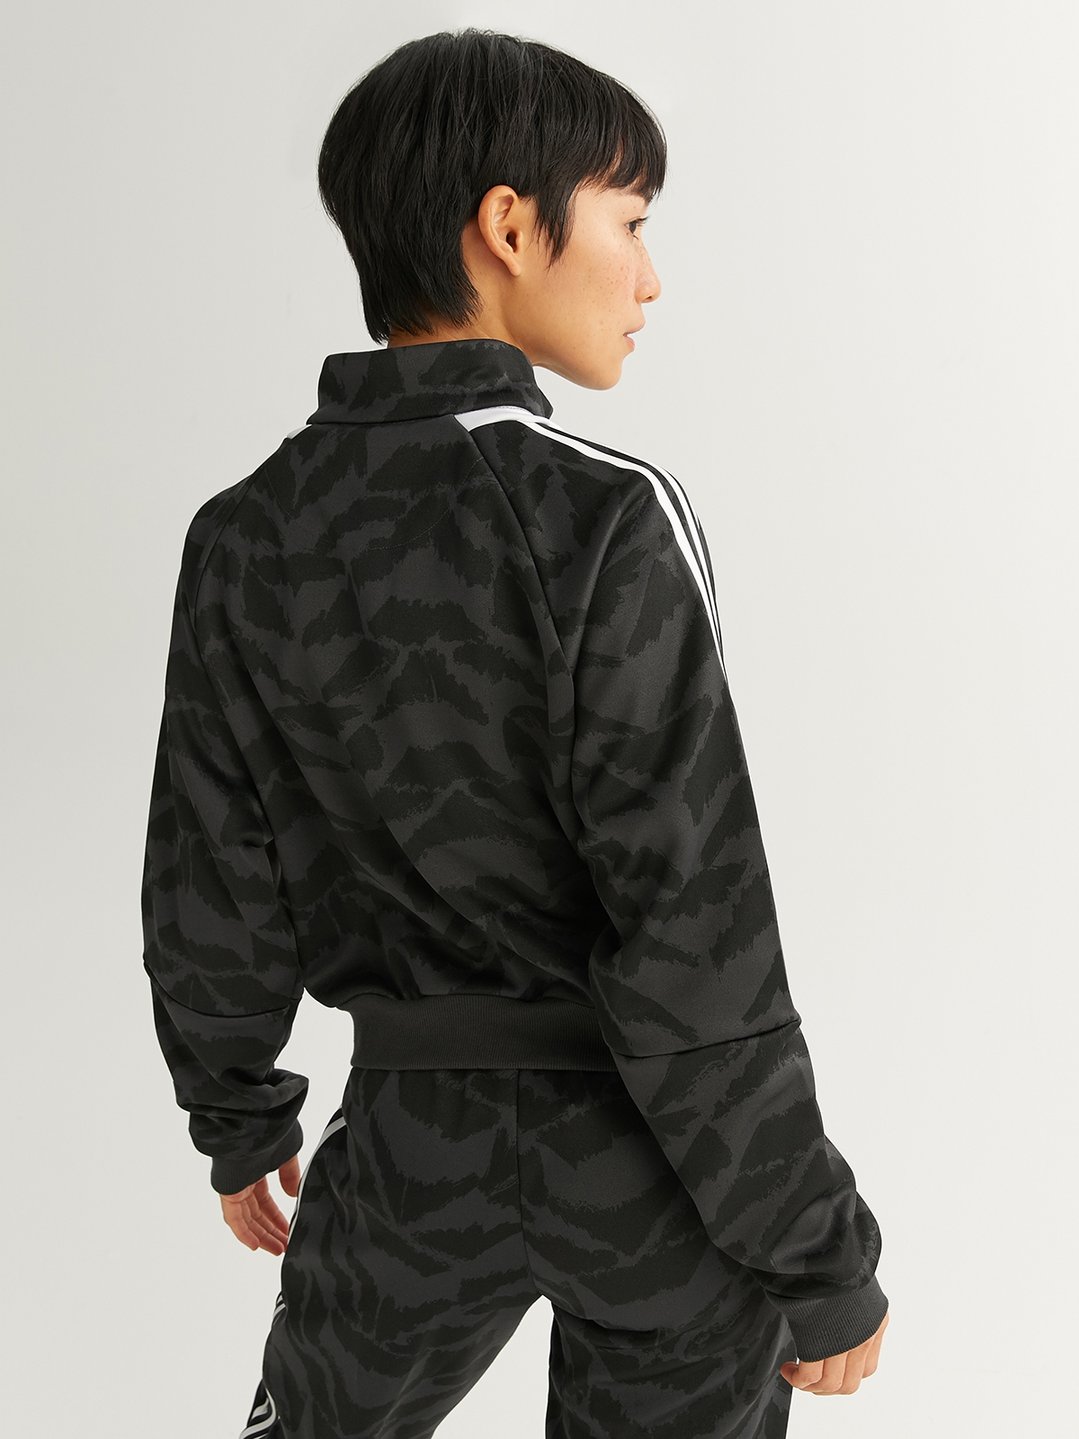 Top Lifestyle - Tiro Fashion - Up Carbon/Black/White Track Pomelo Suit